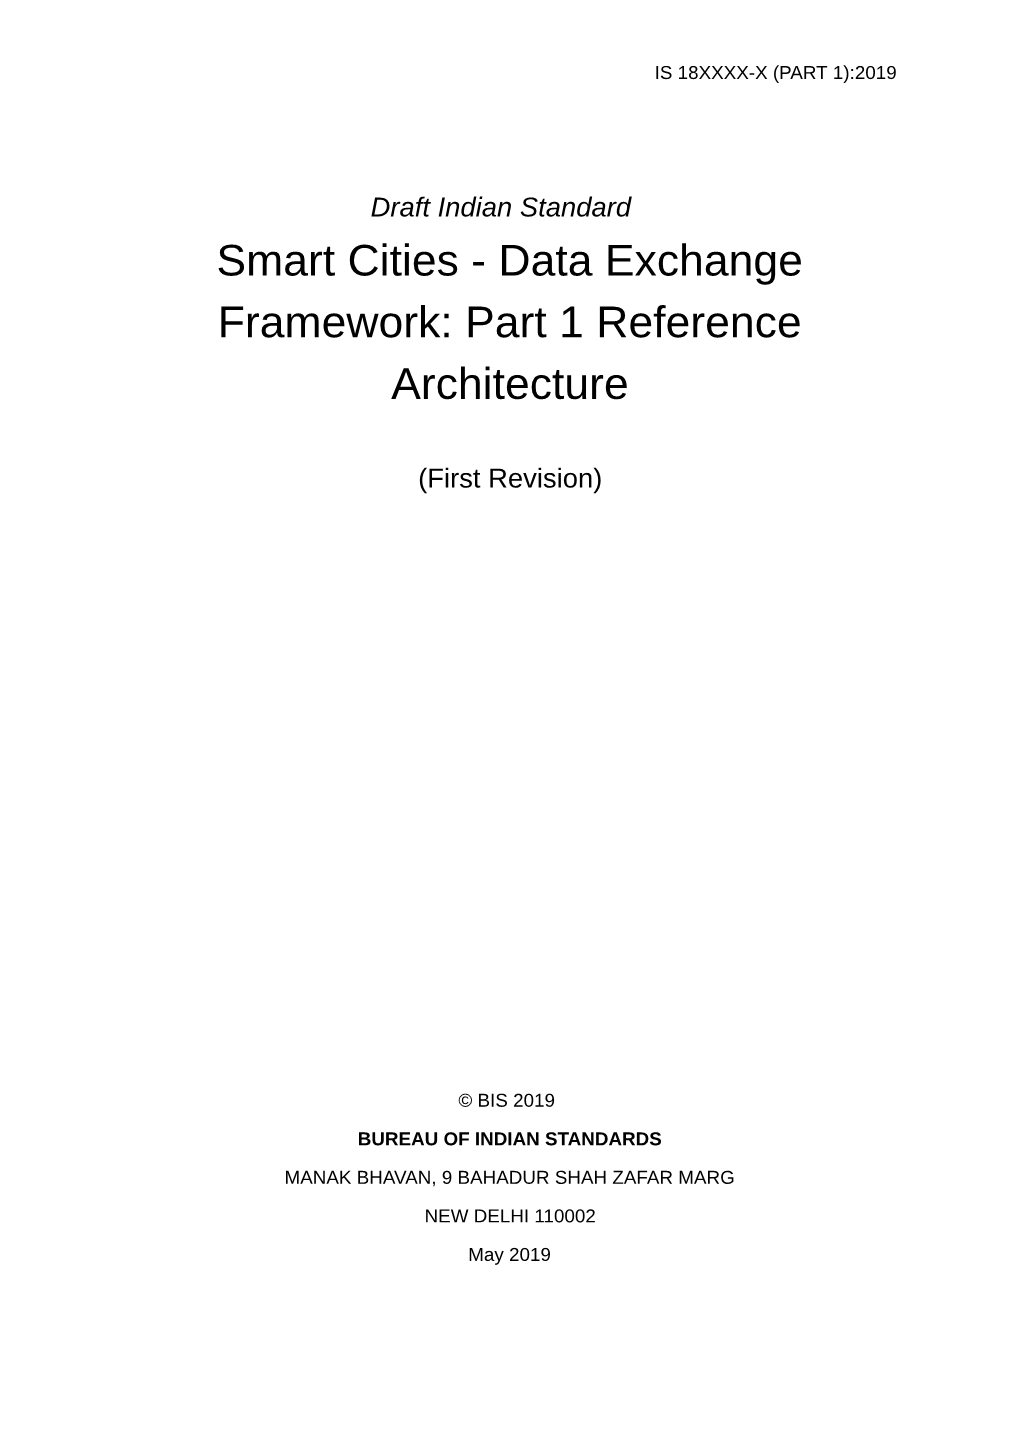 Data Exchange Framework: Part 1 Reference Architecture